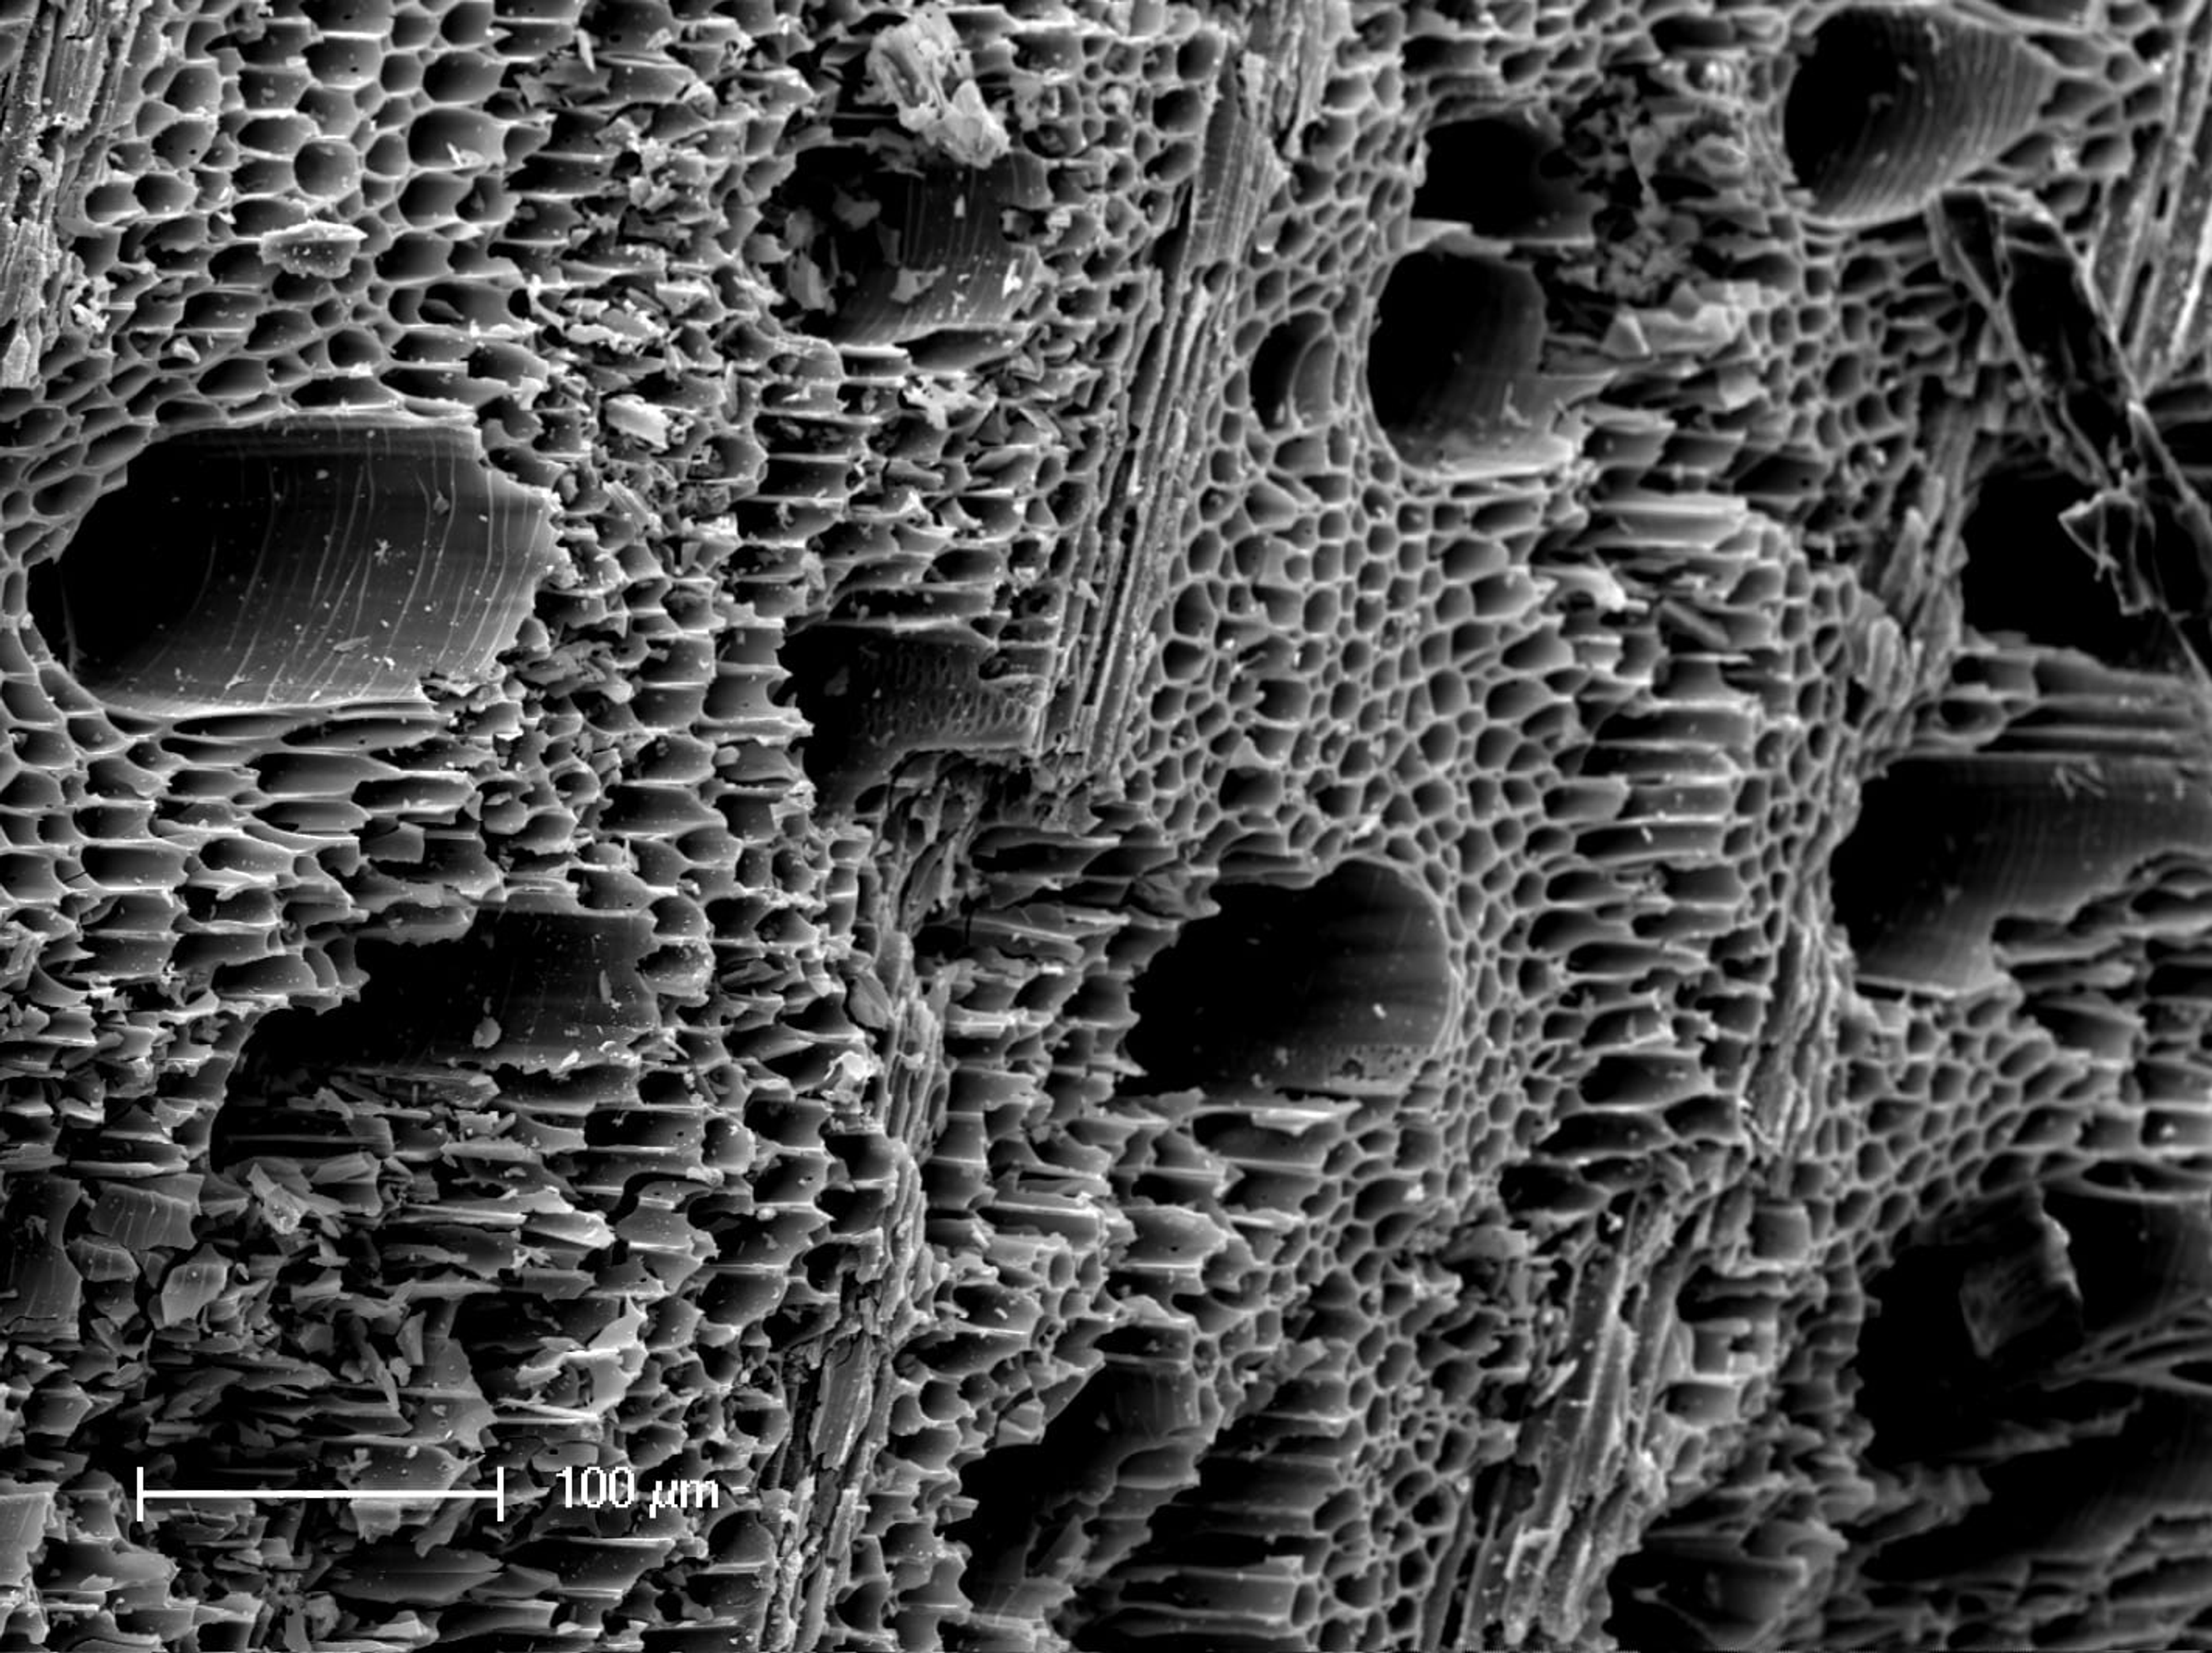 Biochar honeycomb structure under a microscope